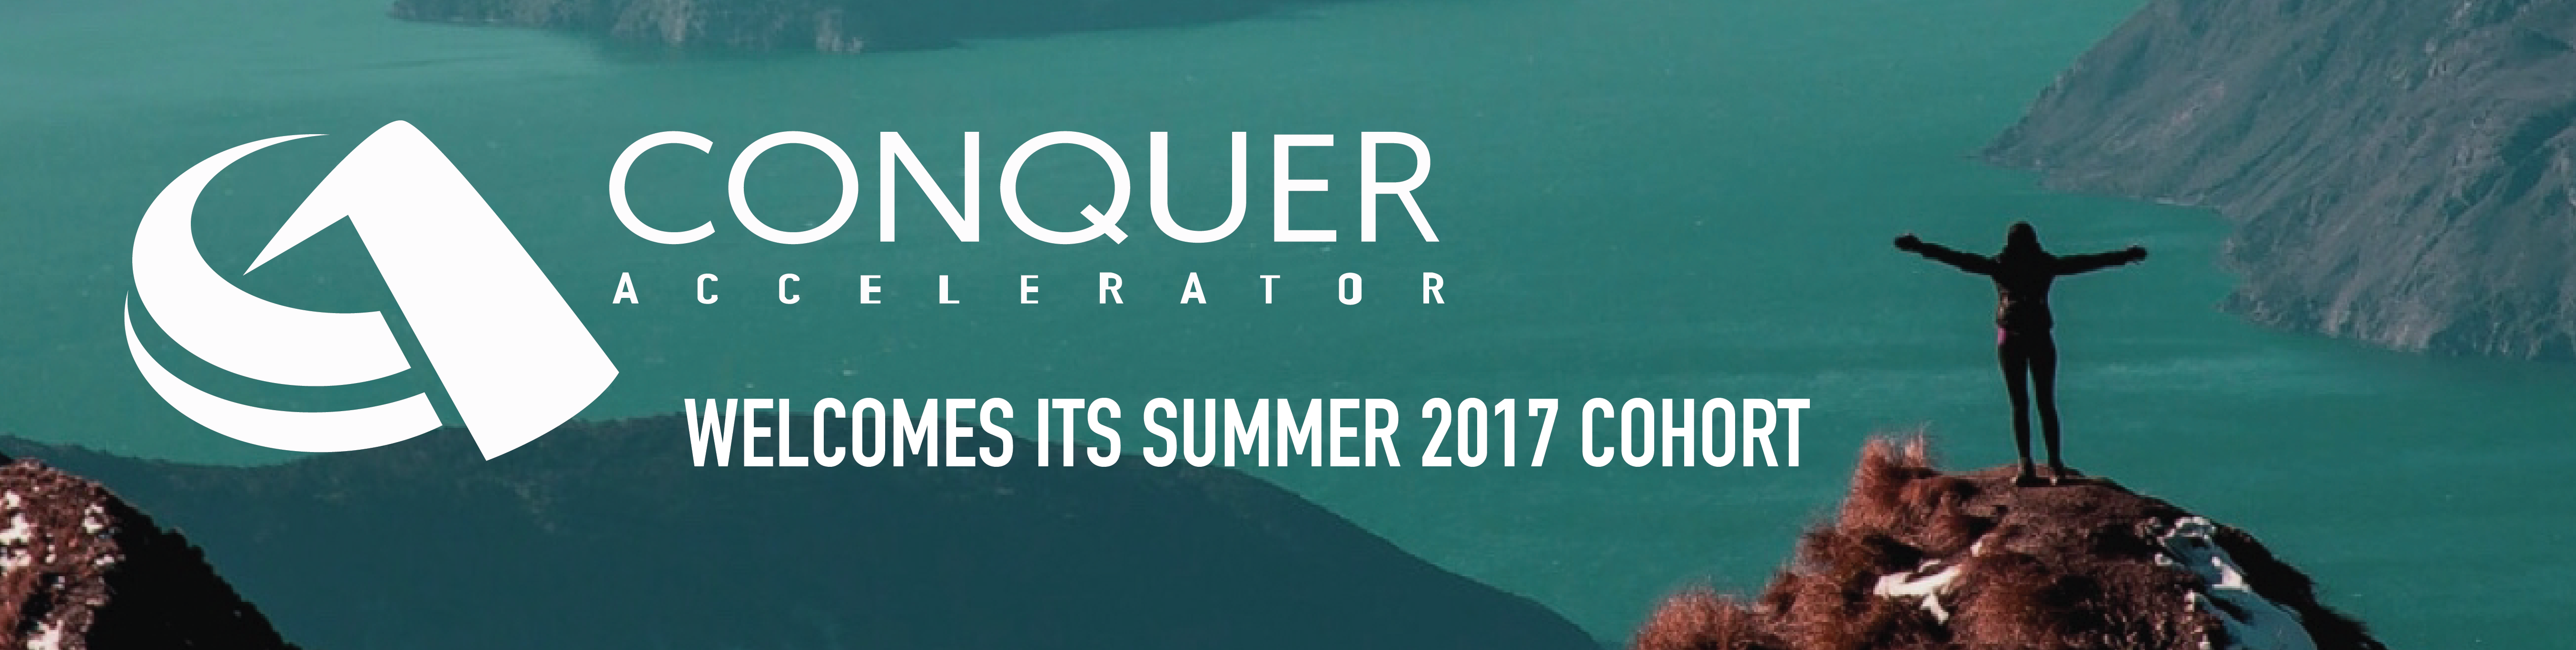 Conquer Accelerator Summer Cohort